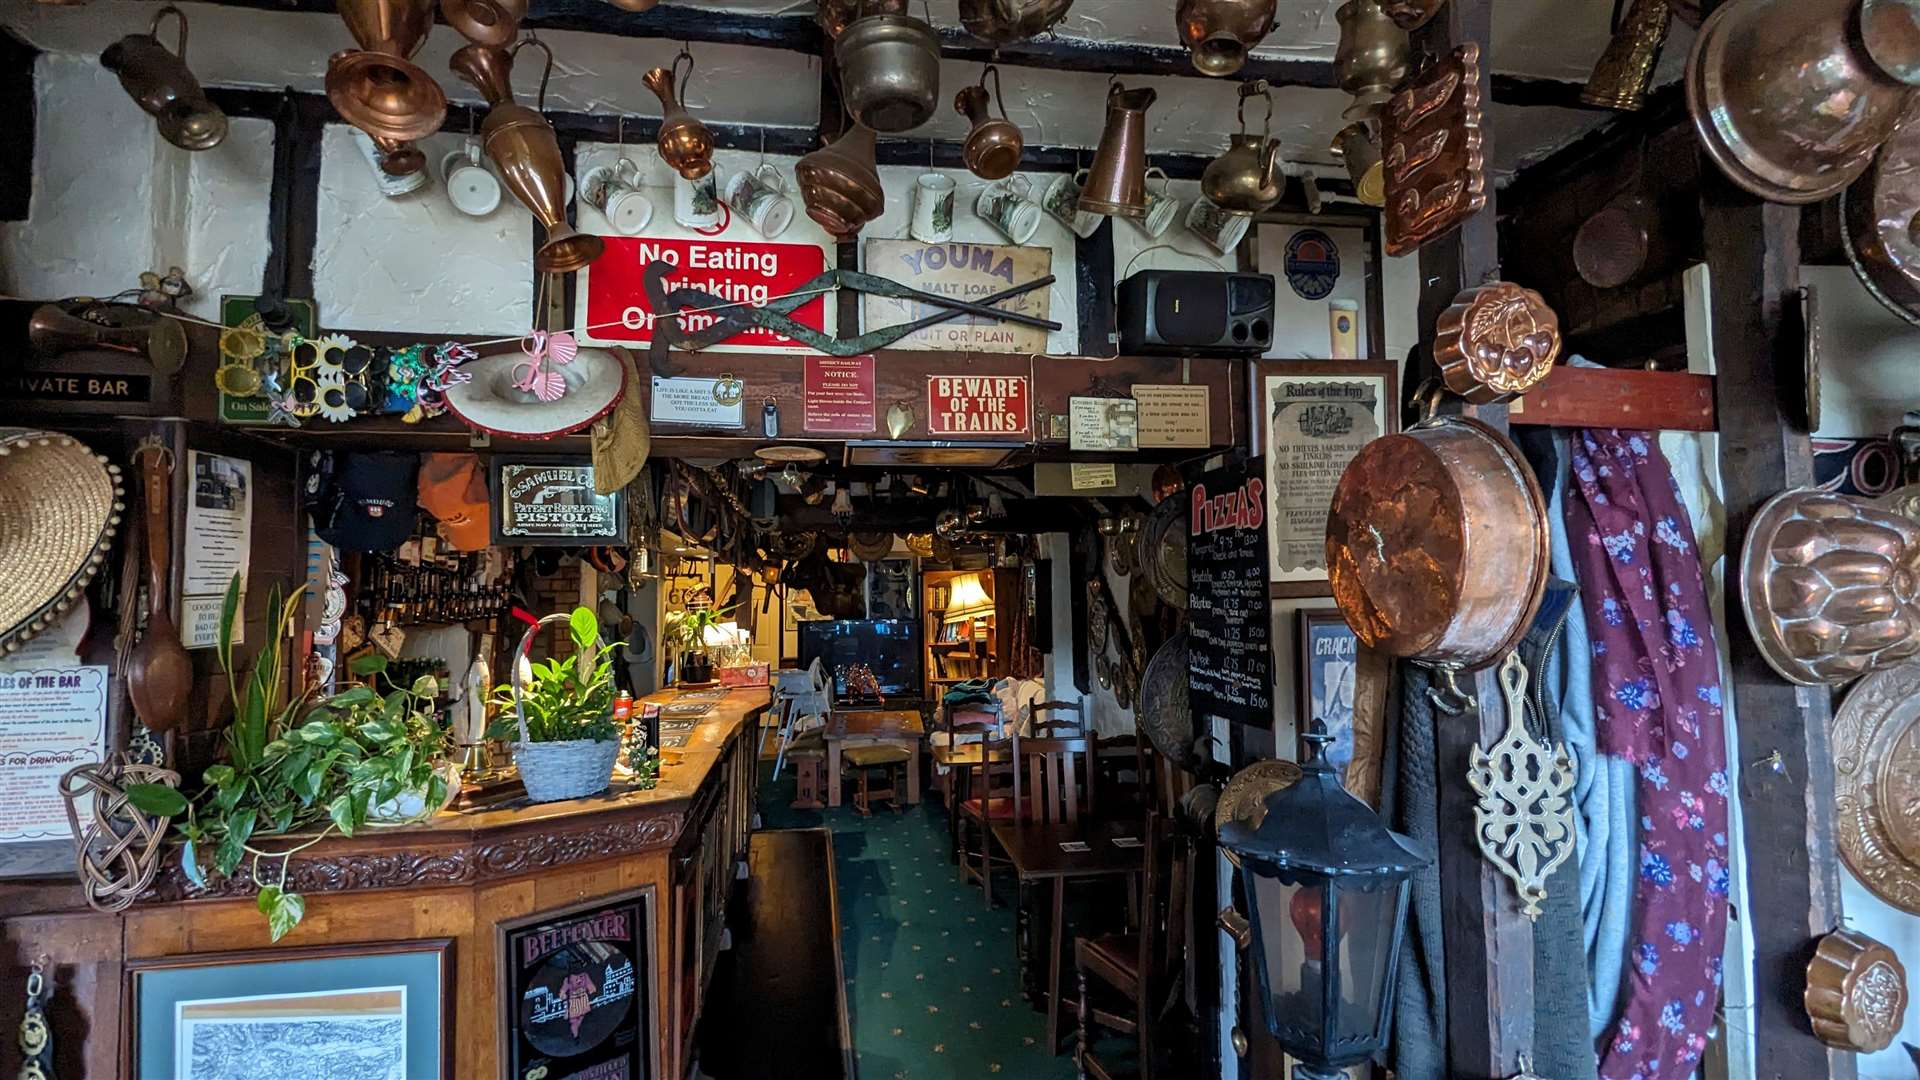 Inside the Three Oaks pub